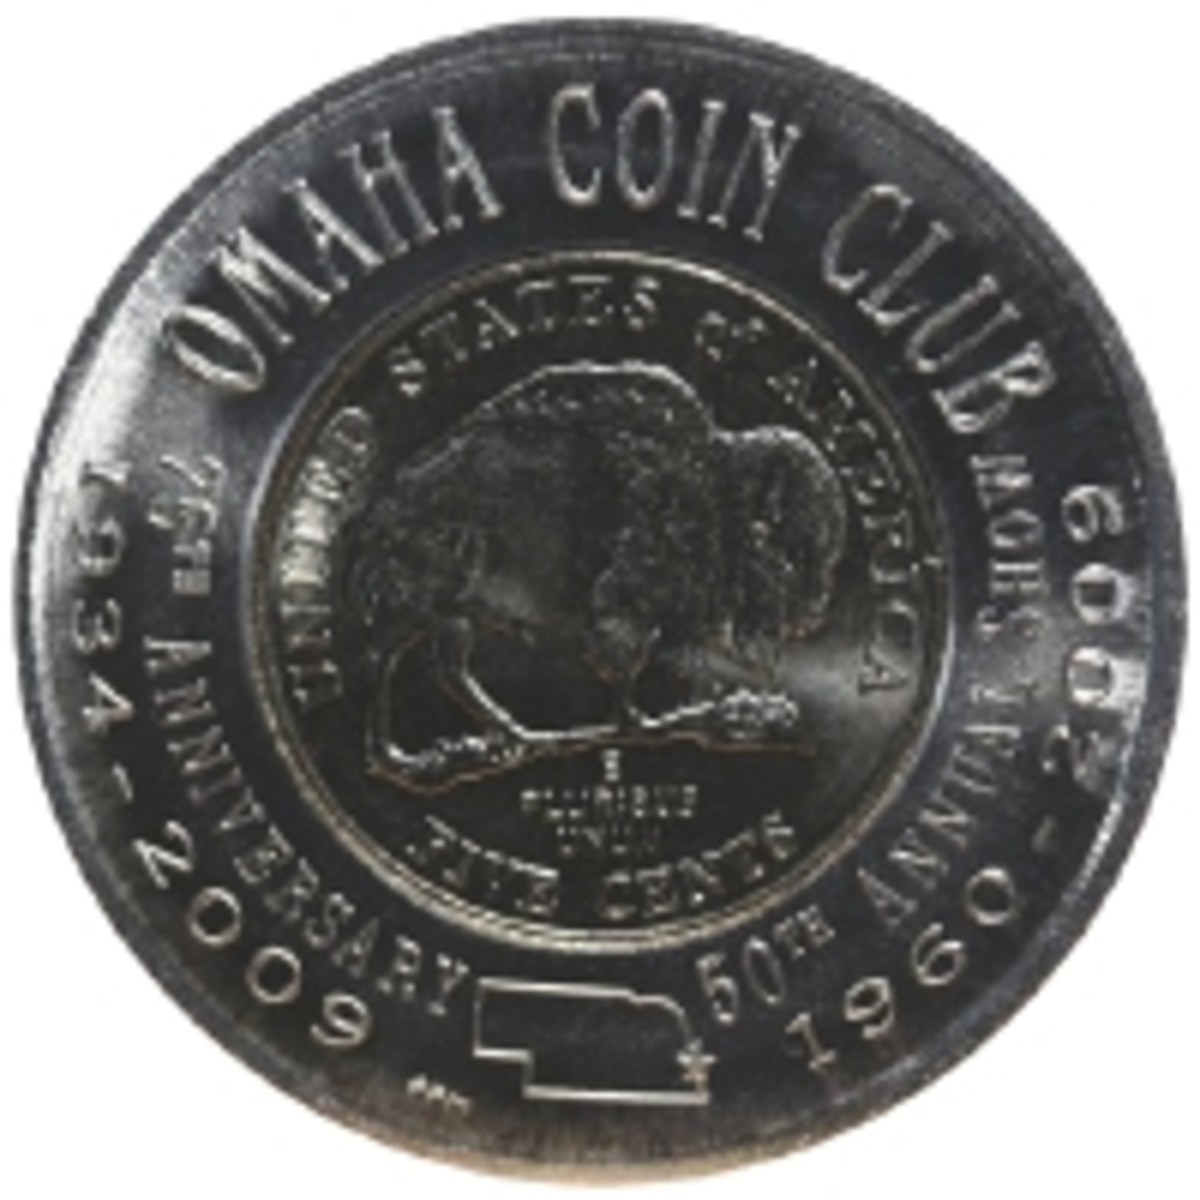 Nickels encased for Omaha anniversaries - Numismatic News